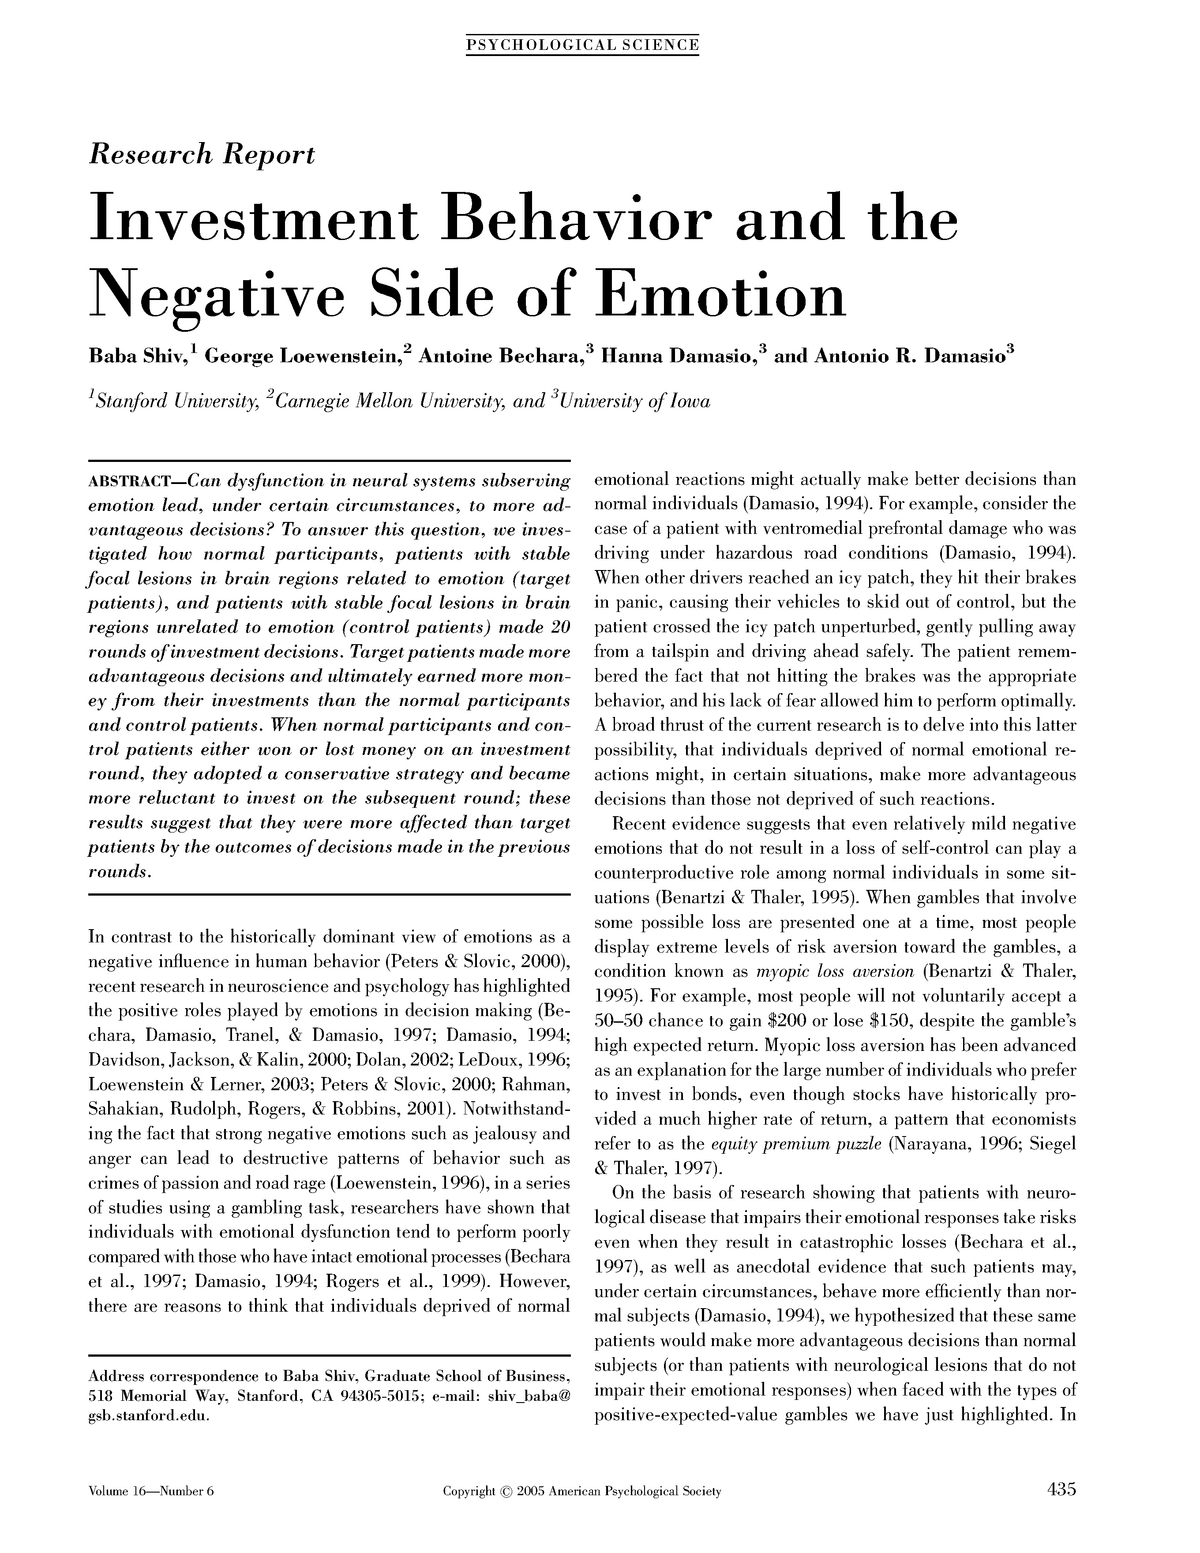 investment behaviour thesis